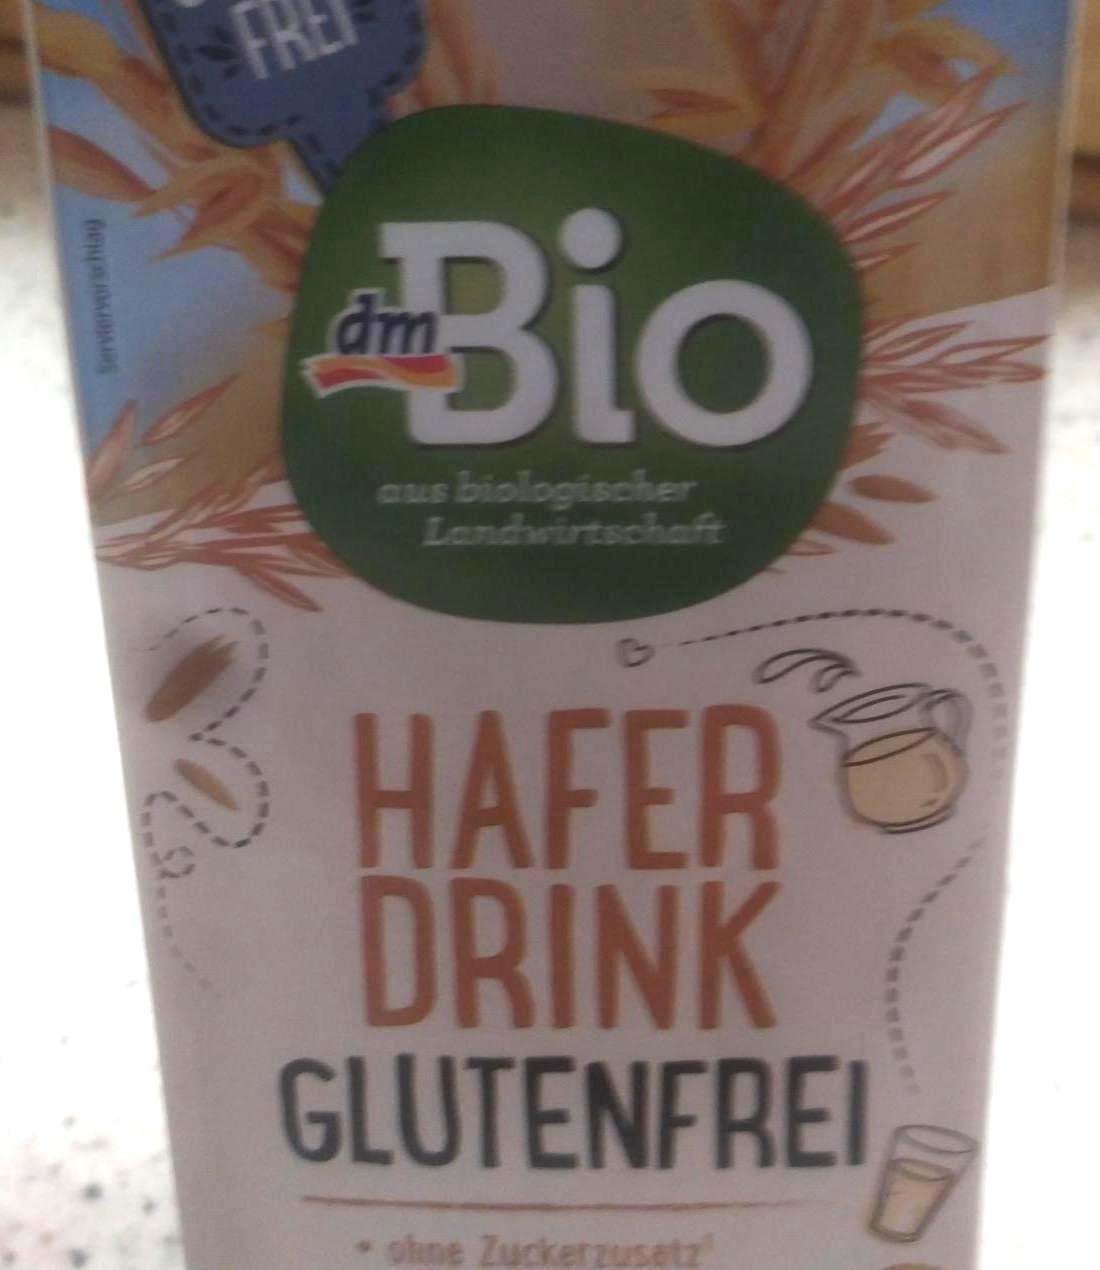 Képek - Haffer drink glutenfrei dmBio